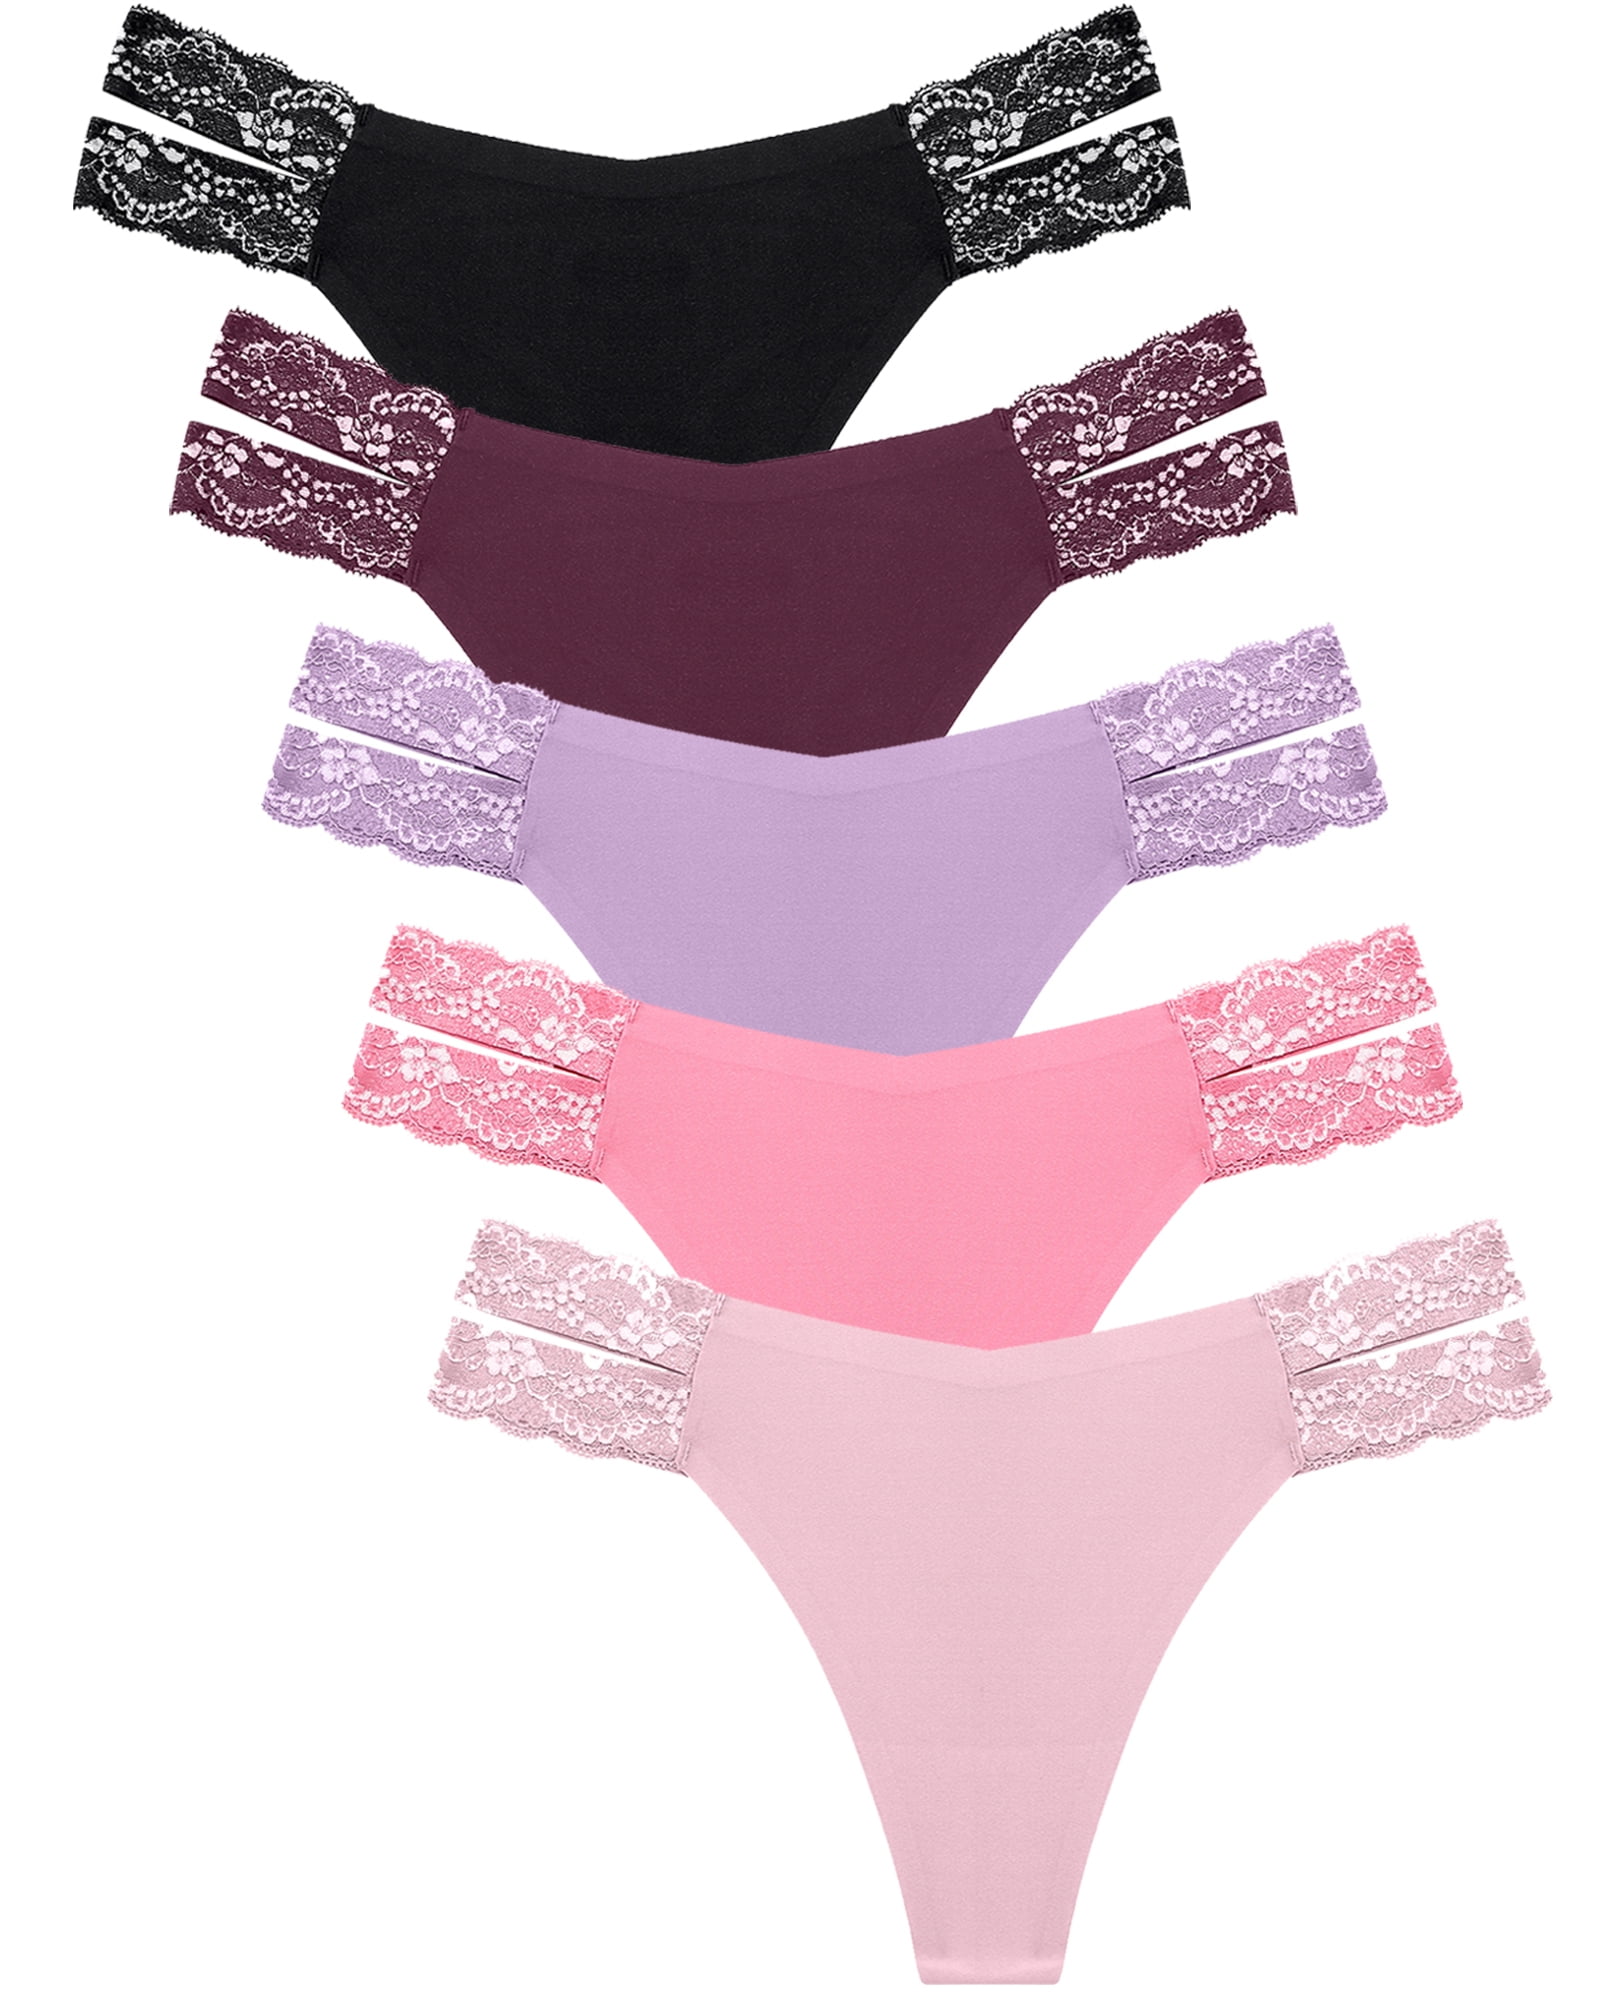 Which is Seamless Underwear for Women Cross Strap Argentina